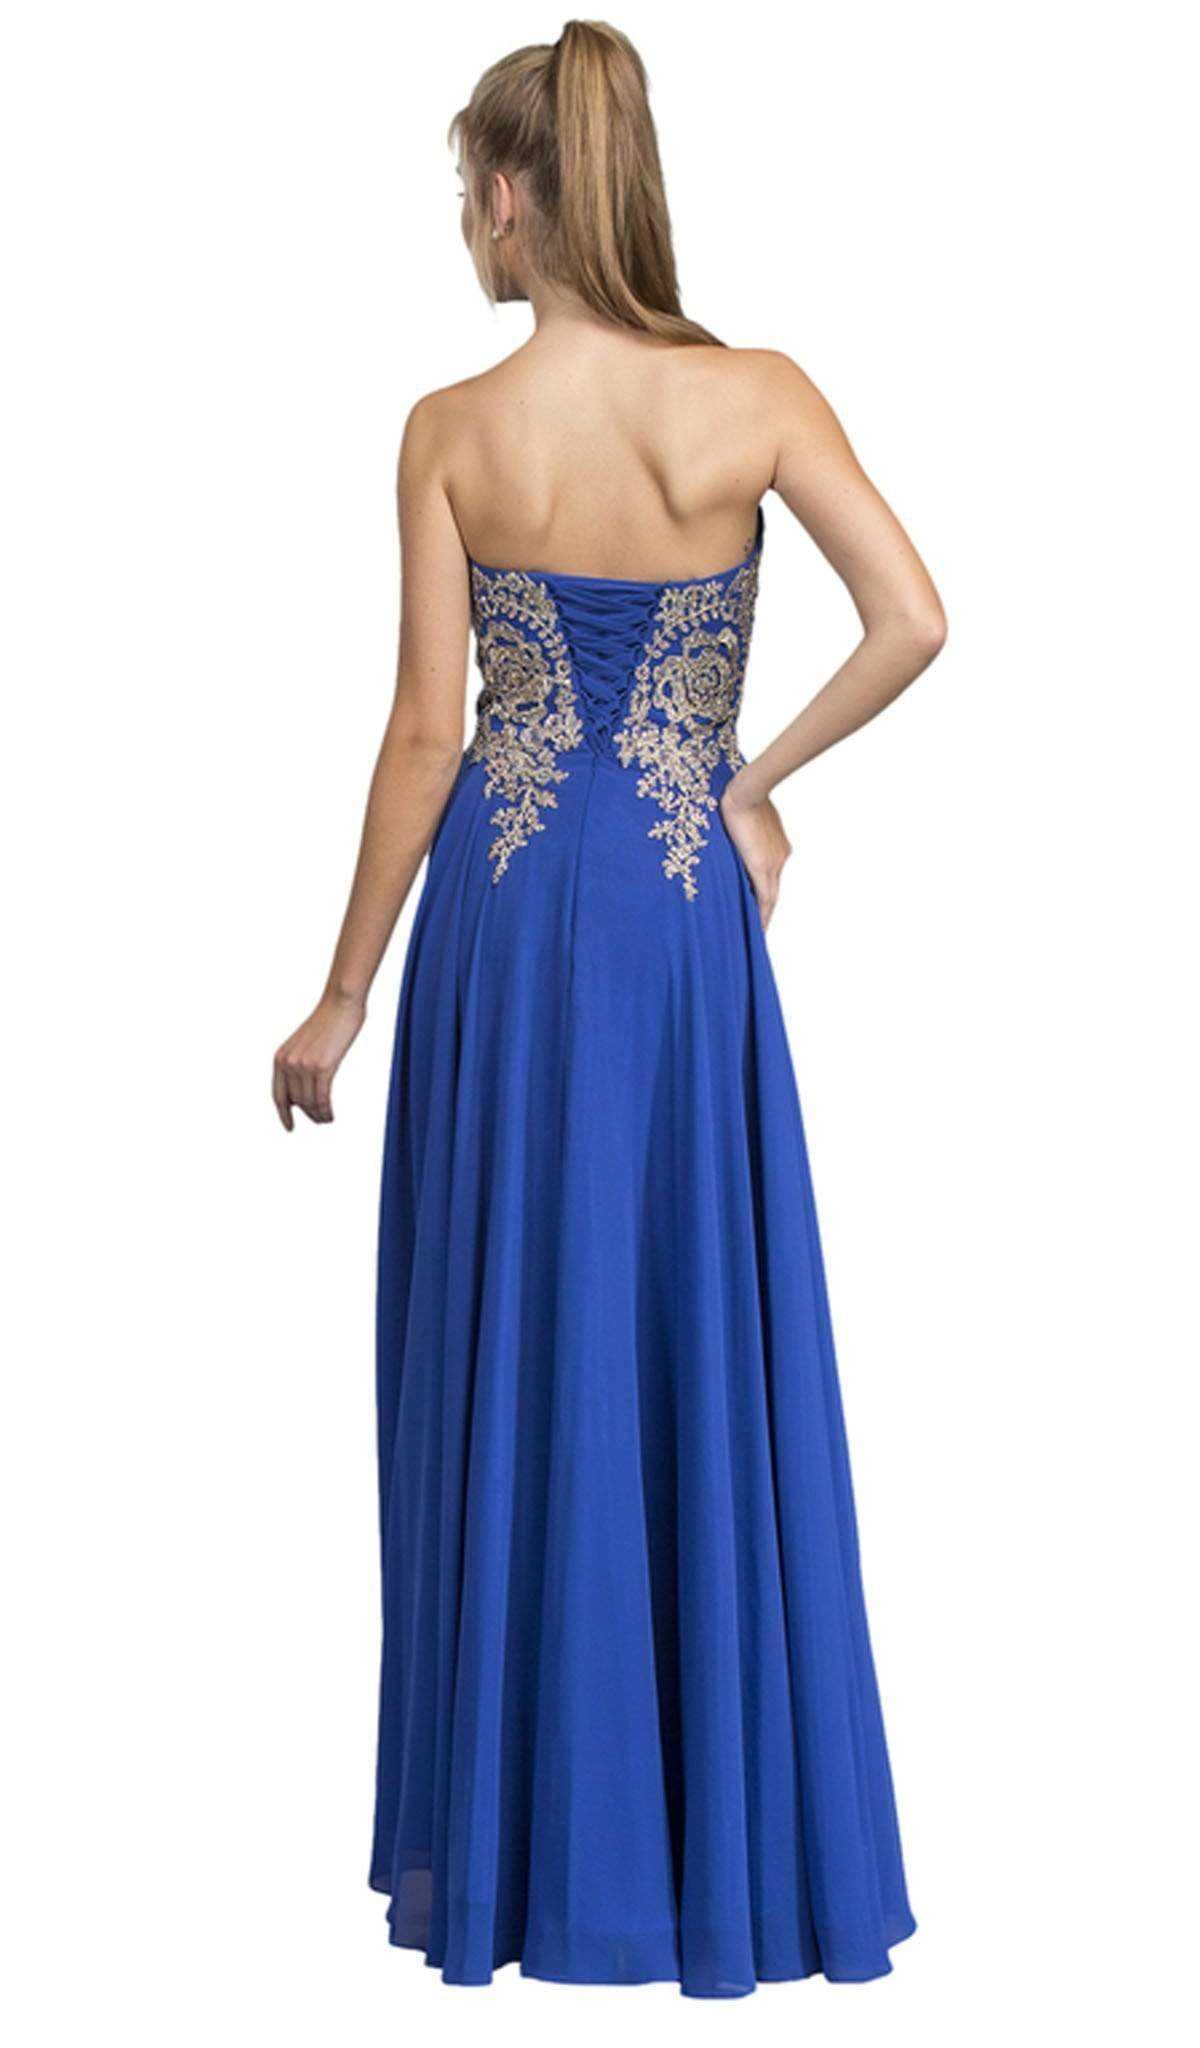 Aspeed Design, Aspeed Design - Strapless Applique Sweetheart Prom Dress